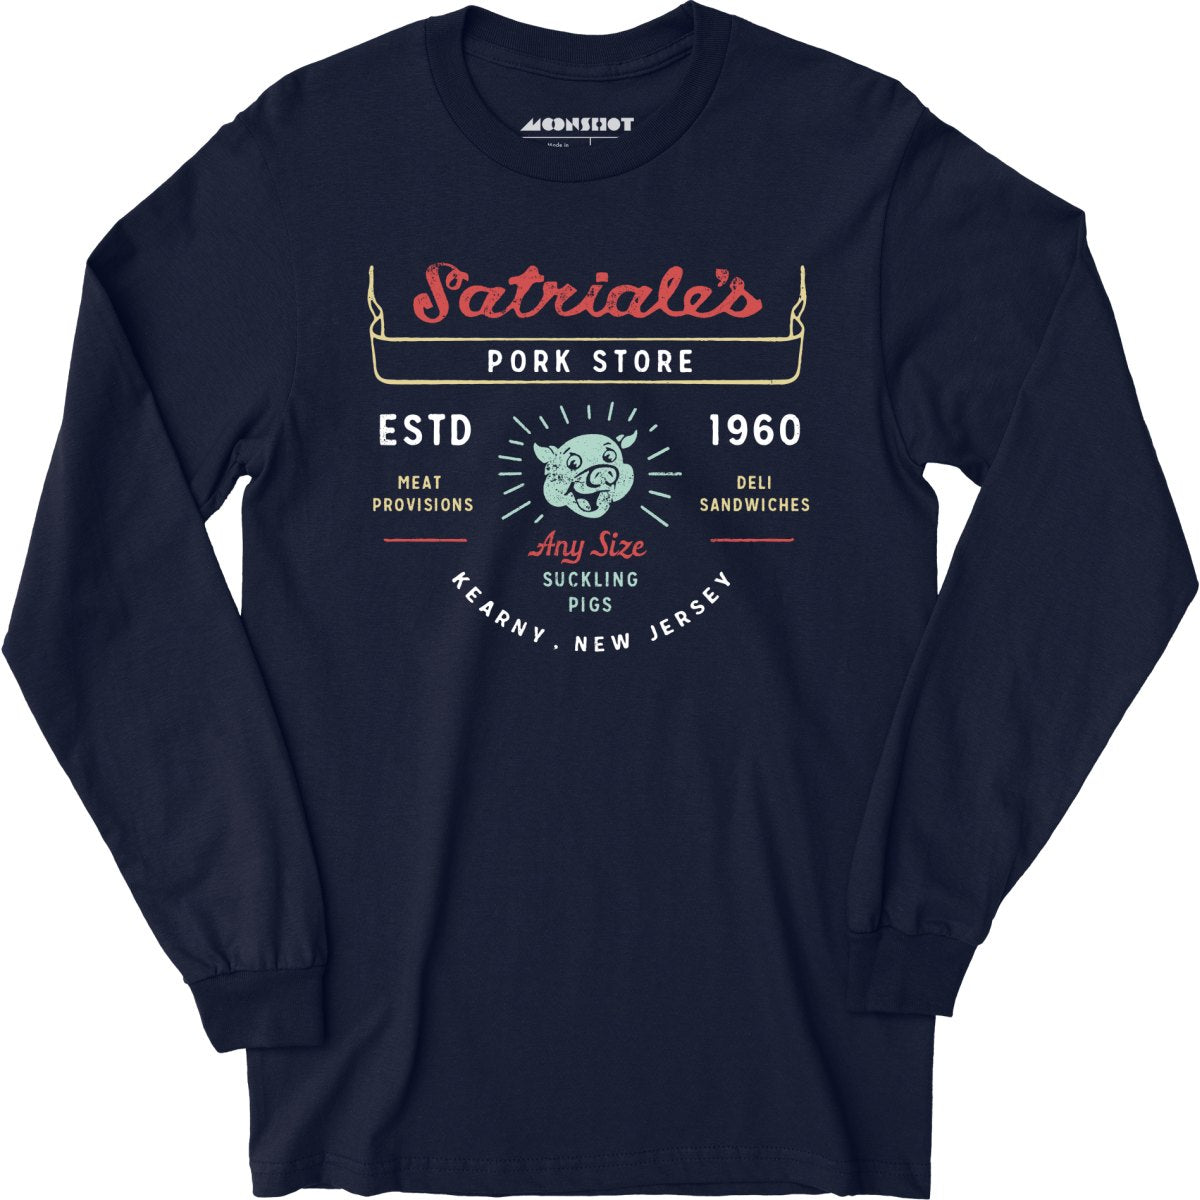 Satriale's Pork Store - Long Sleeve T-Shirt